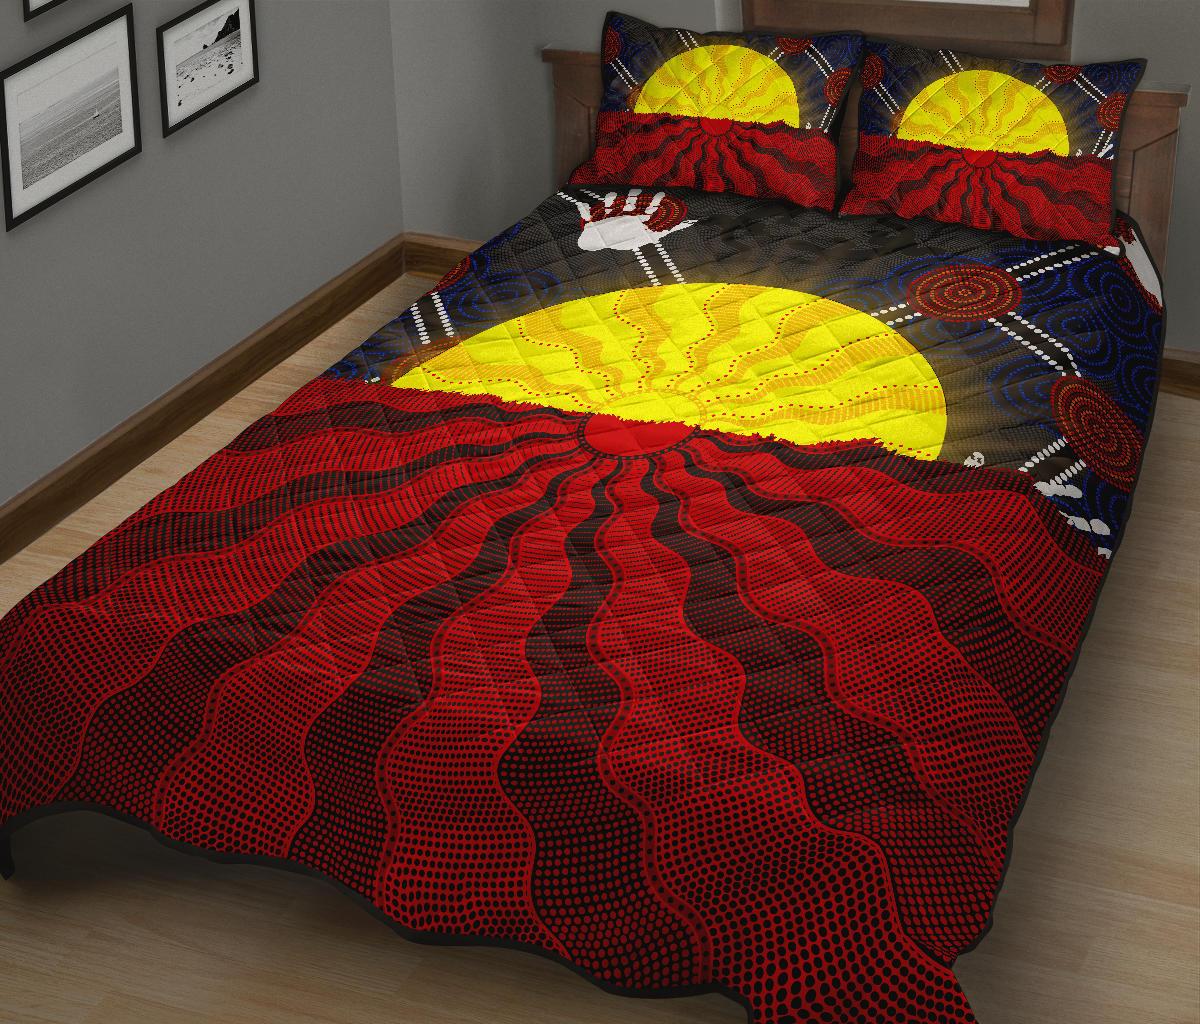 Aboriginal Quilt Bed Set - Aboriginal Lives Matter Flag Sun Dot Painting